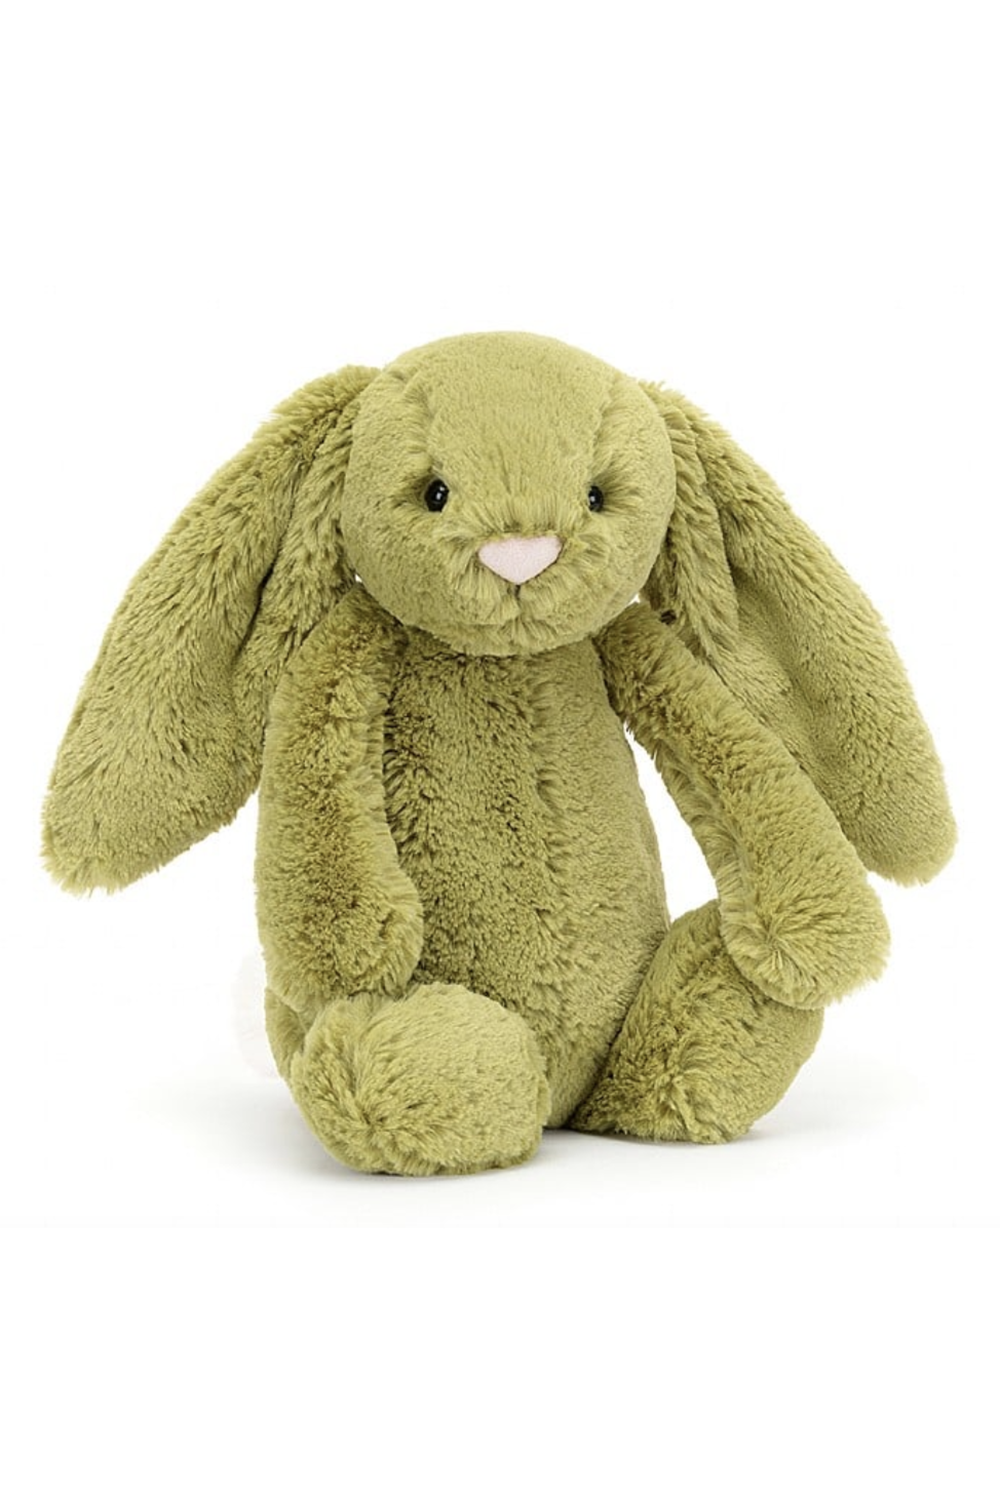 JELLYCAT Bashful Bunny - Moss